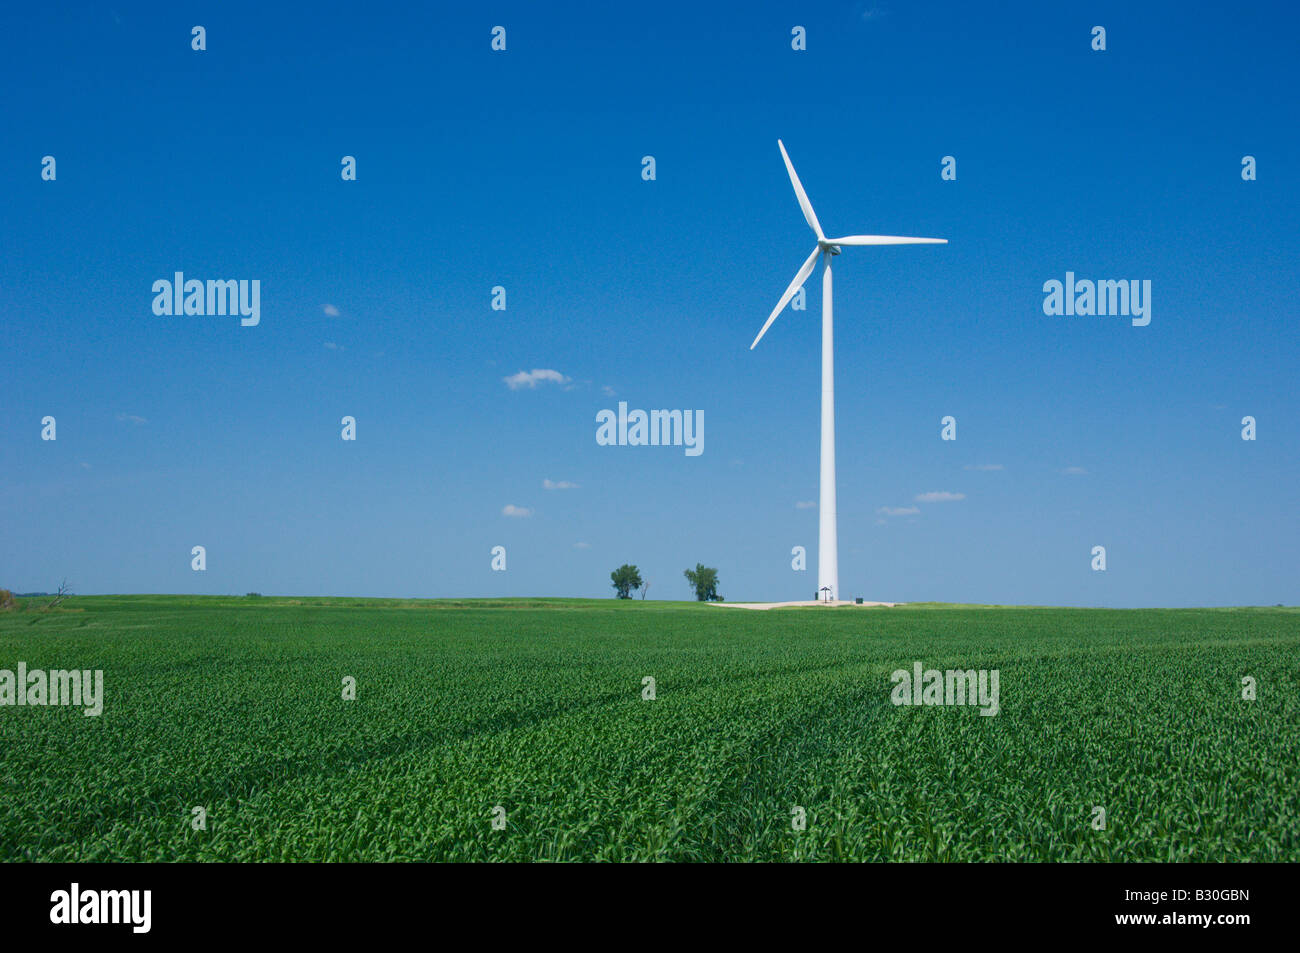 A lone windmill in a grain field generating electricity in rural North Dakota USA Stock Photo